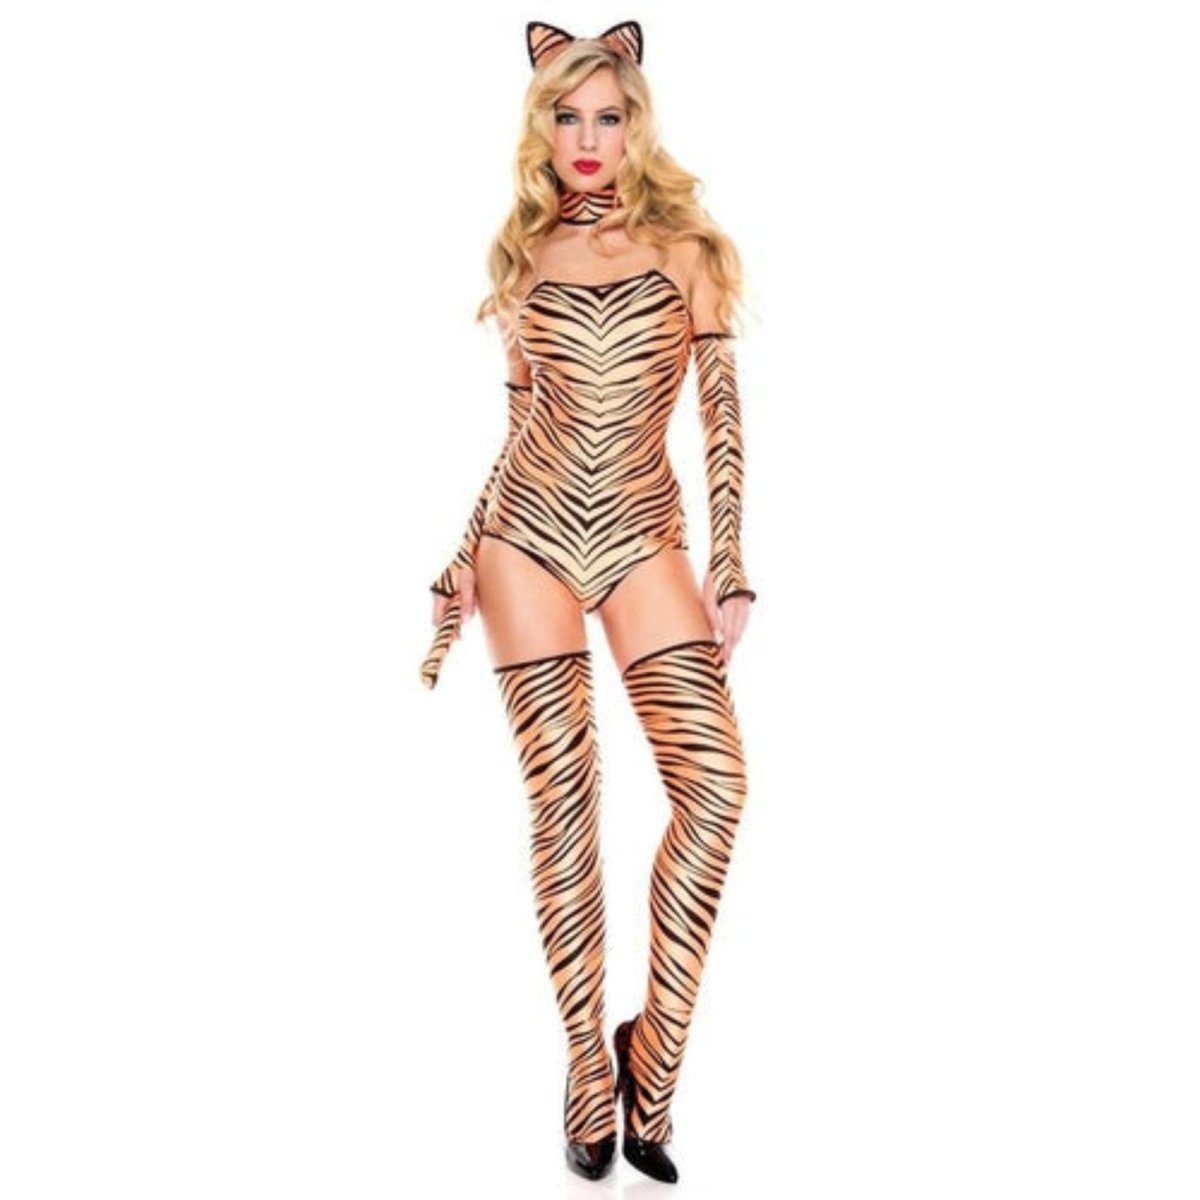 Pouncing Tiger Ladies Costume - worldclasscostumes